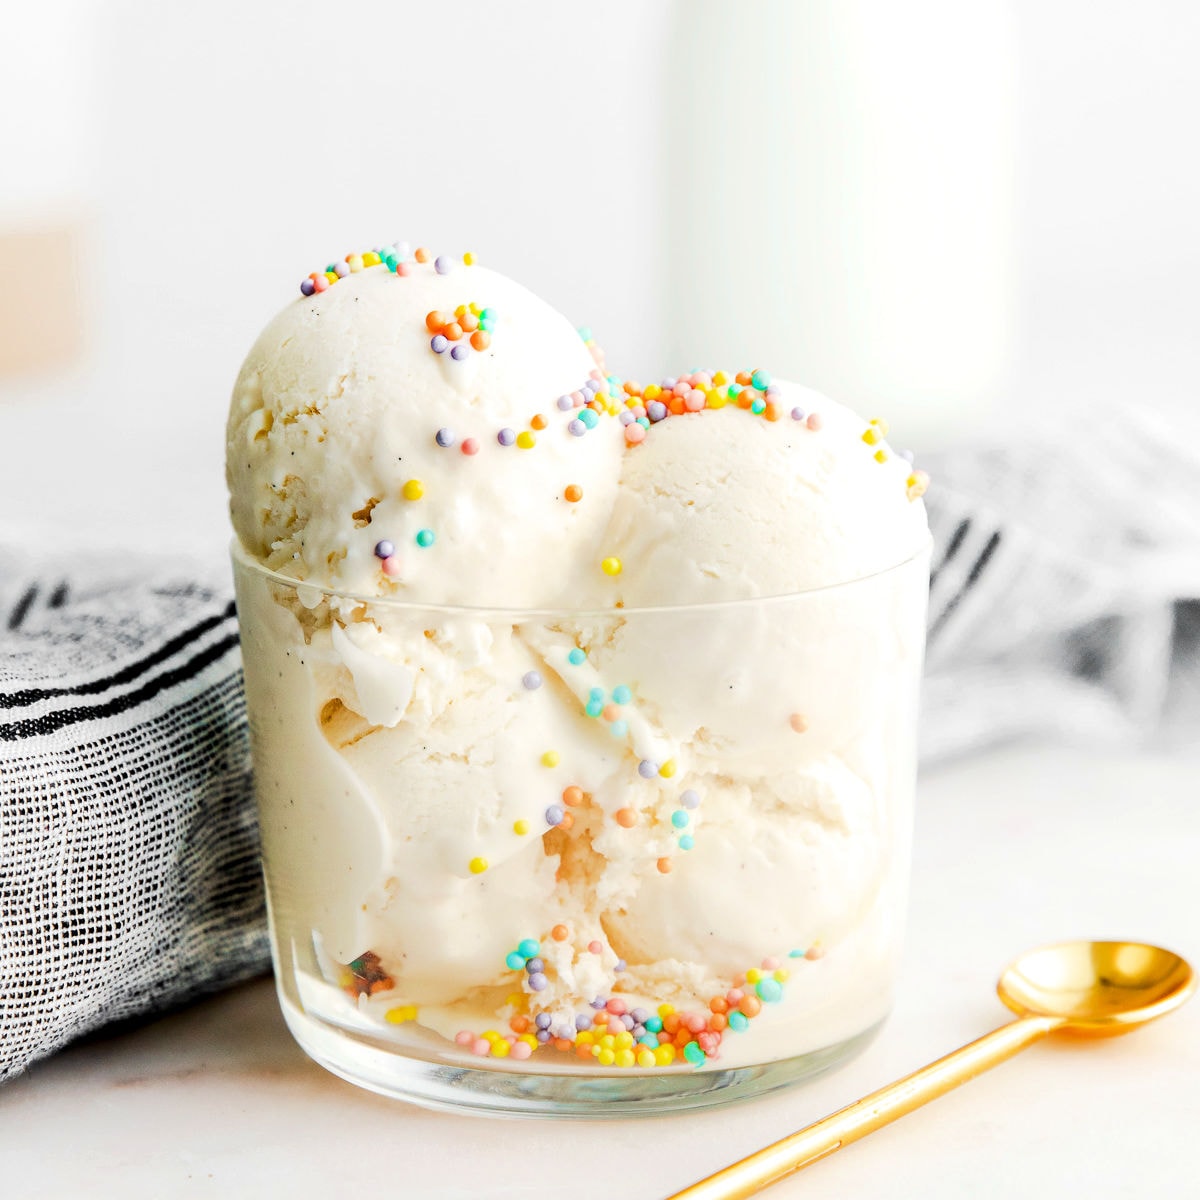 https://www.momontimeout.com/wp-content/uploads/2021/04/homemade-vanilla-ice-cream-square.jpeg